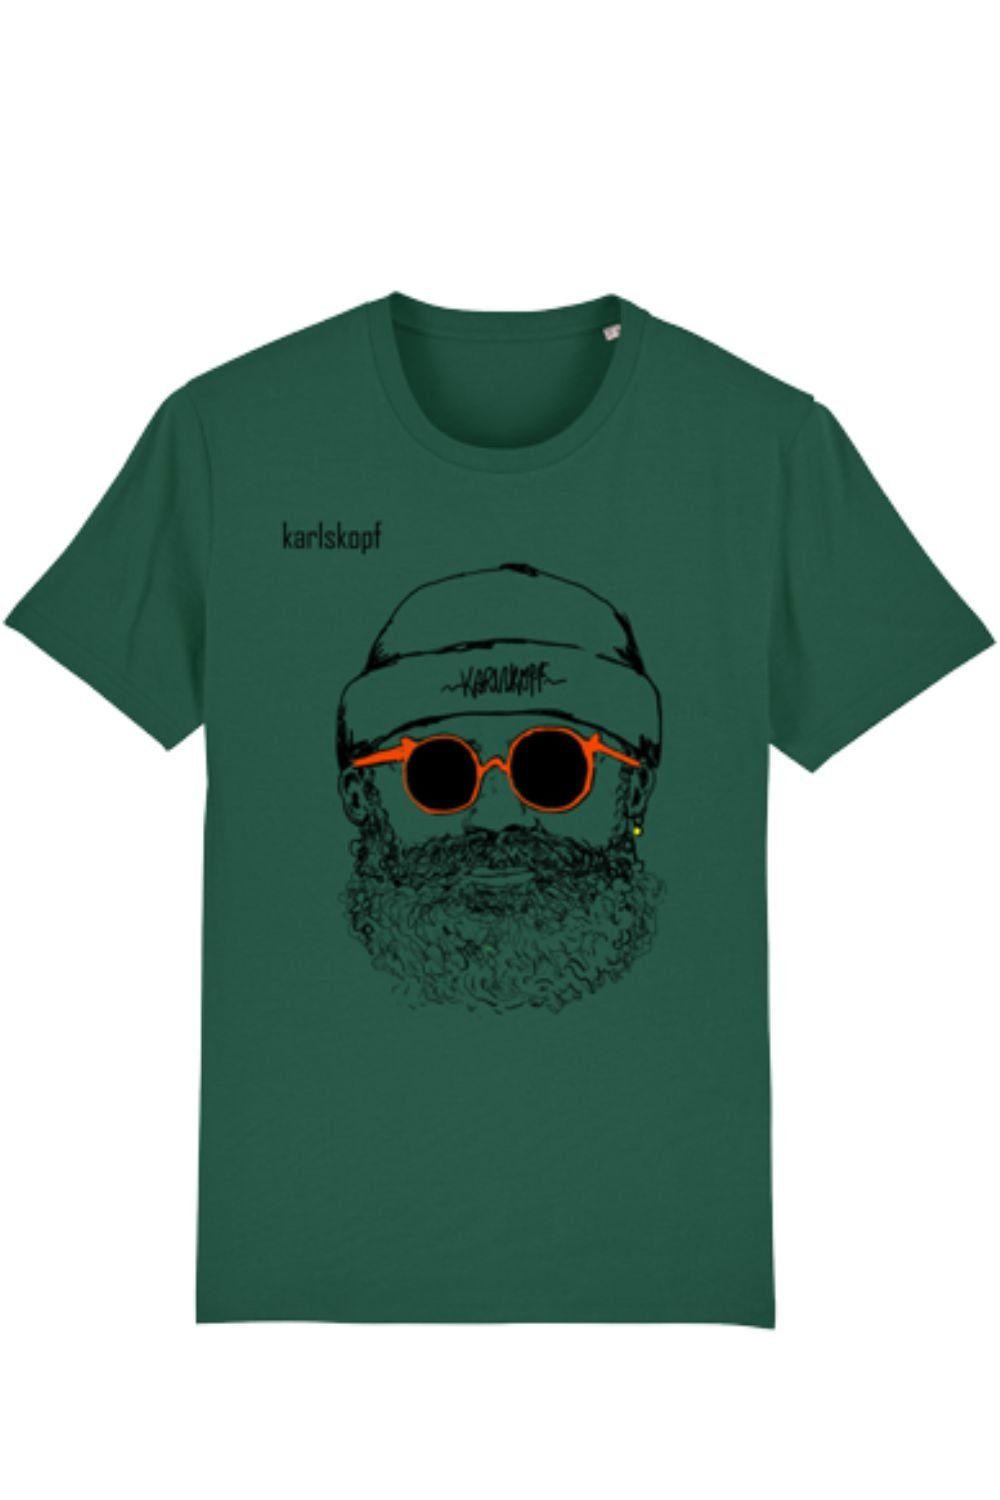 Print-Shirt Basic Softgruen karlskopf Rundhalsshirt HIPSTER